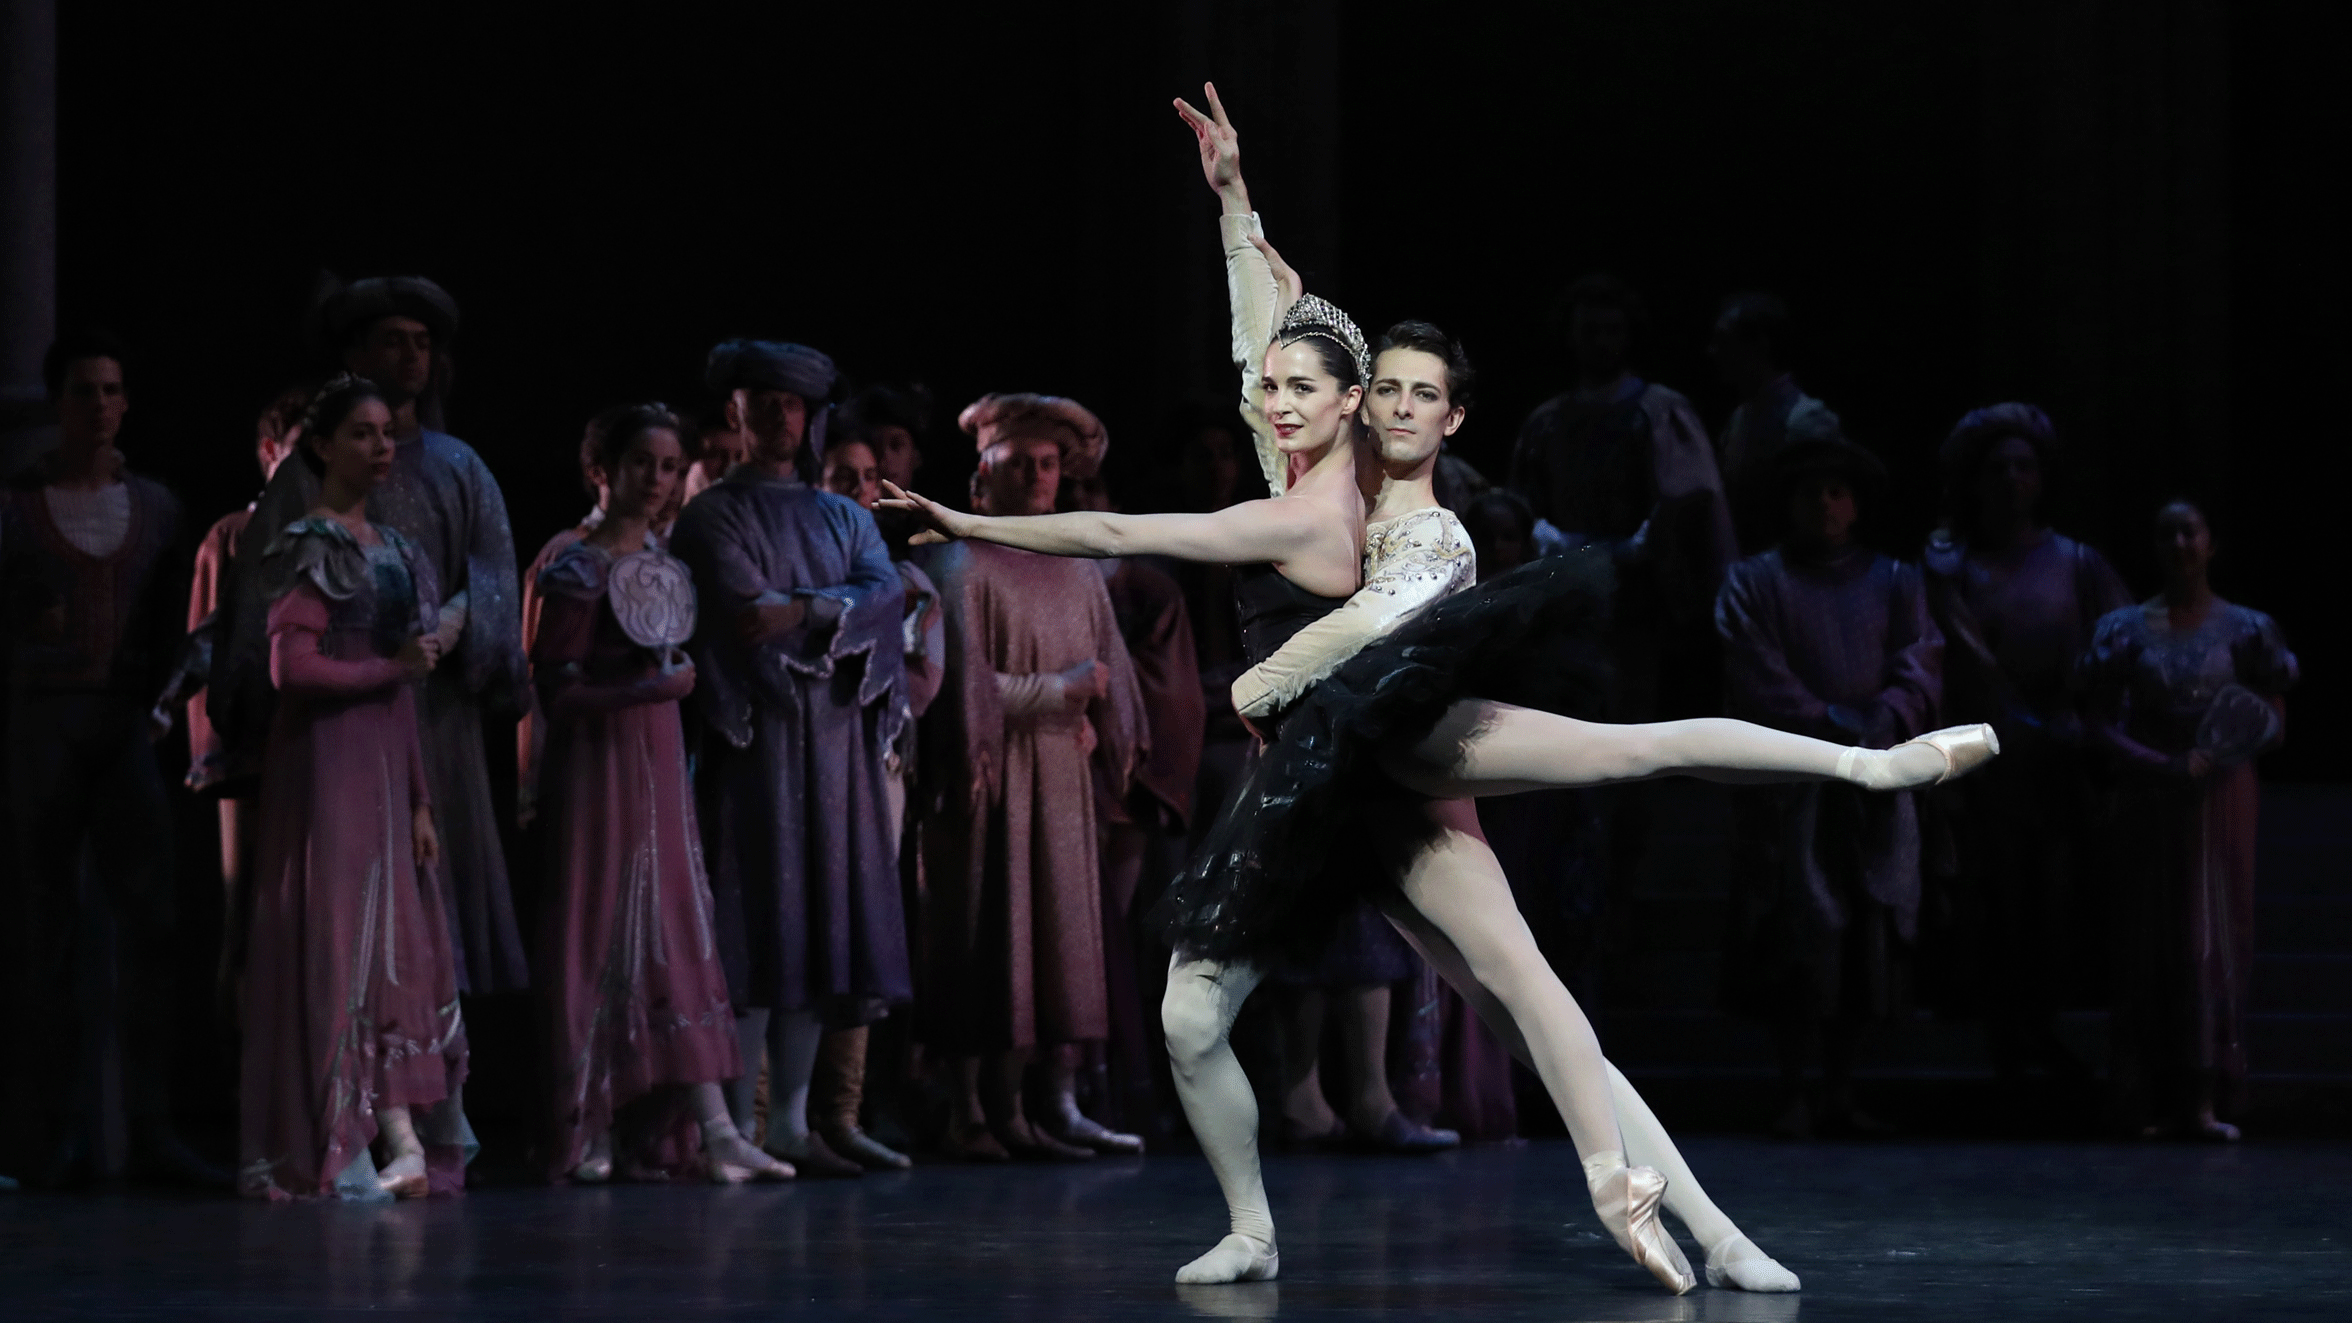 Ballet Swan Lake by Nureyev after Petipa, music by Tchaikovsky - Opéra national Paris - medici.tv